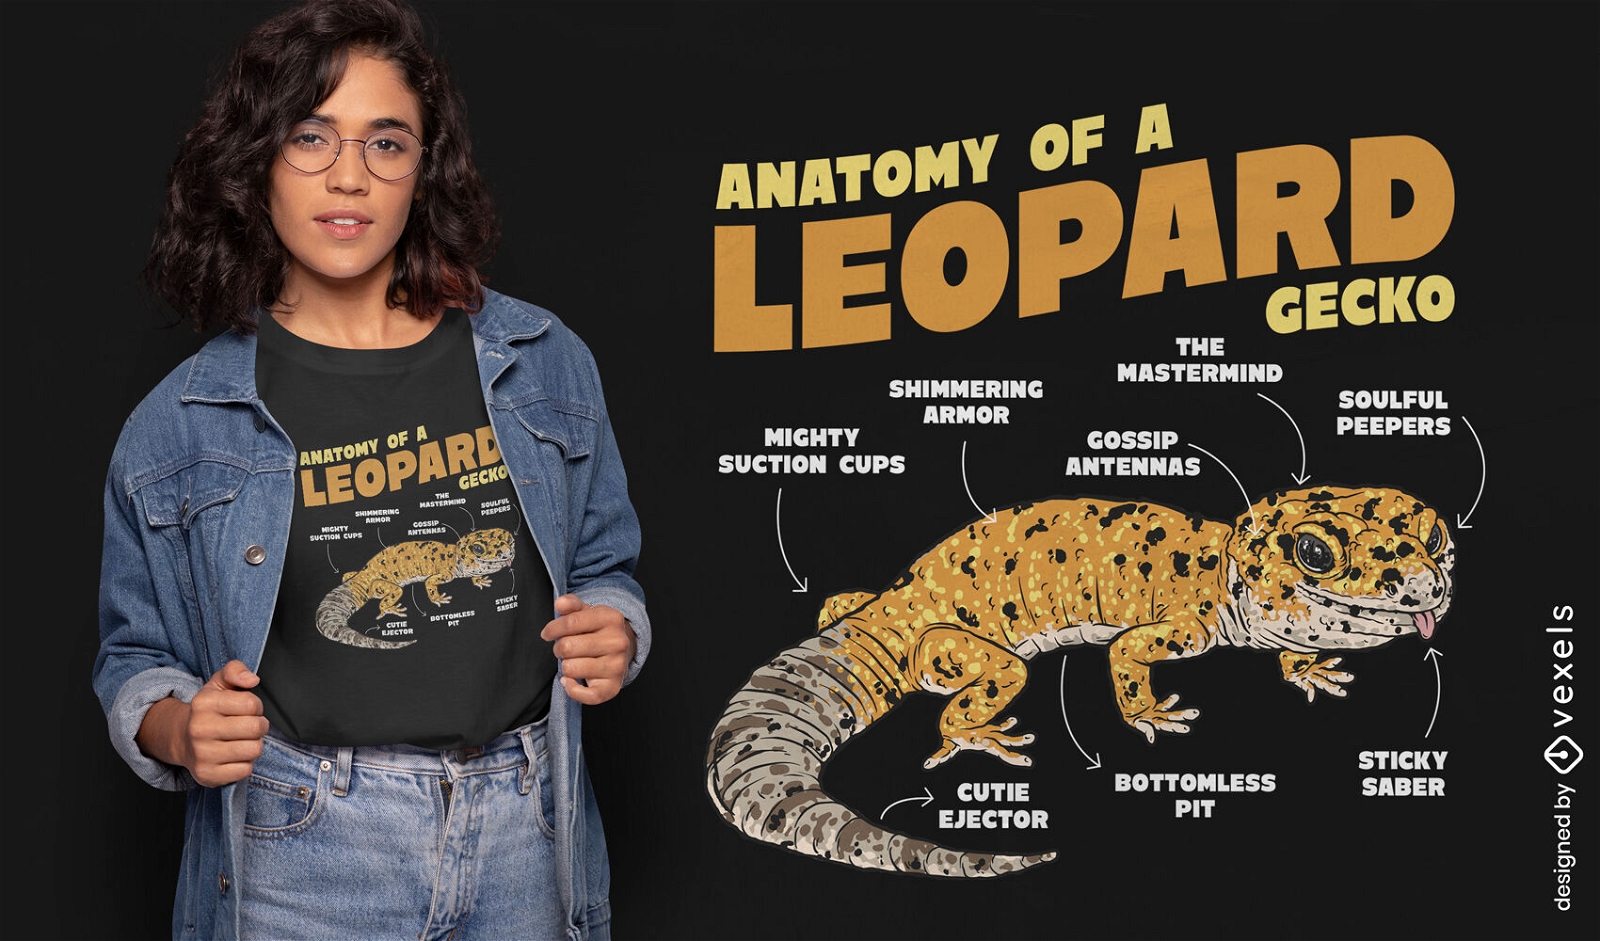 Leopard gecko anatomy t-shirt design